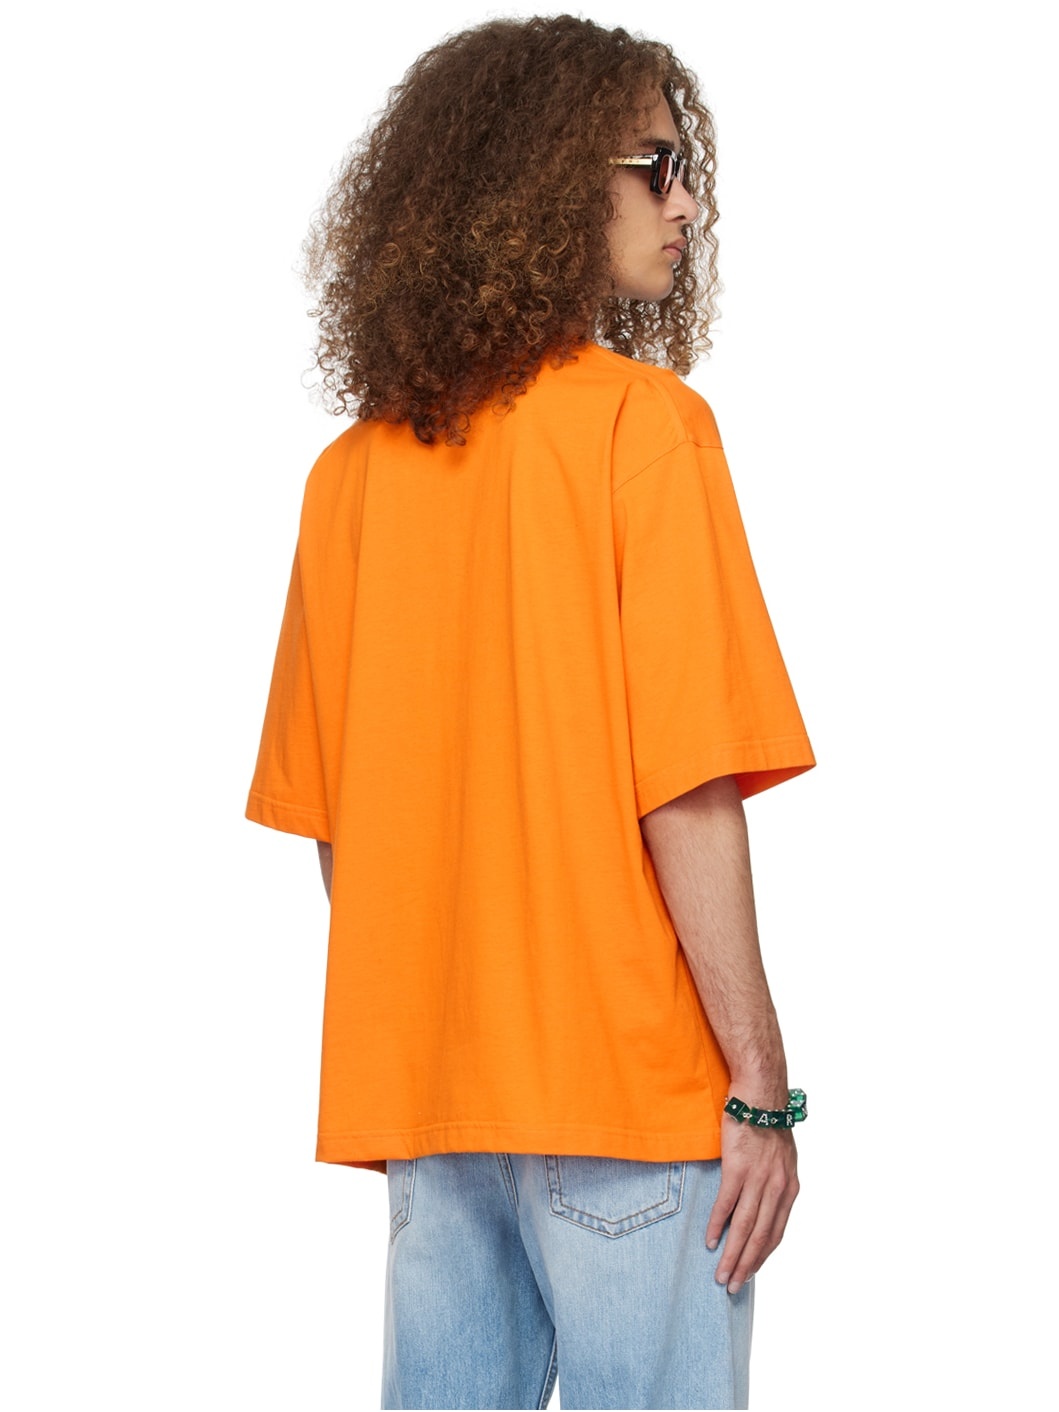 SSENSE Exclusive Orange T-Shirt - 3